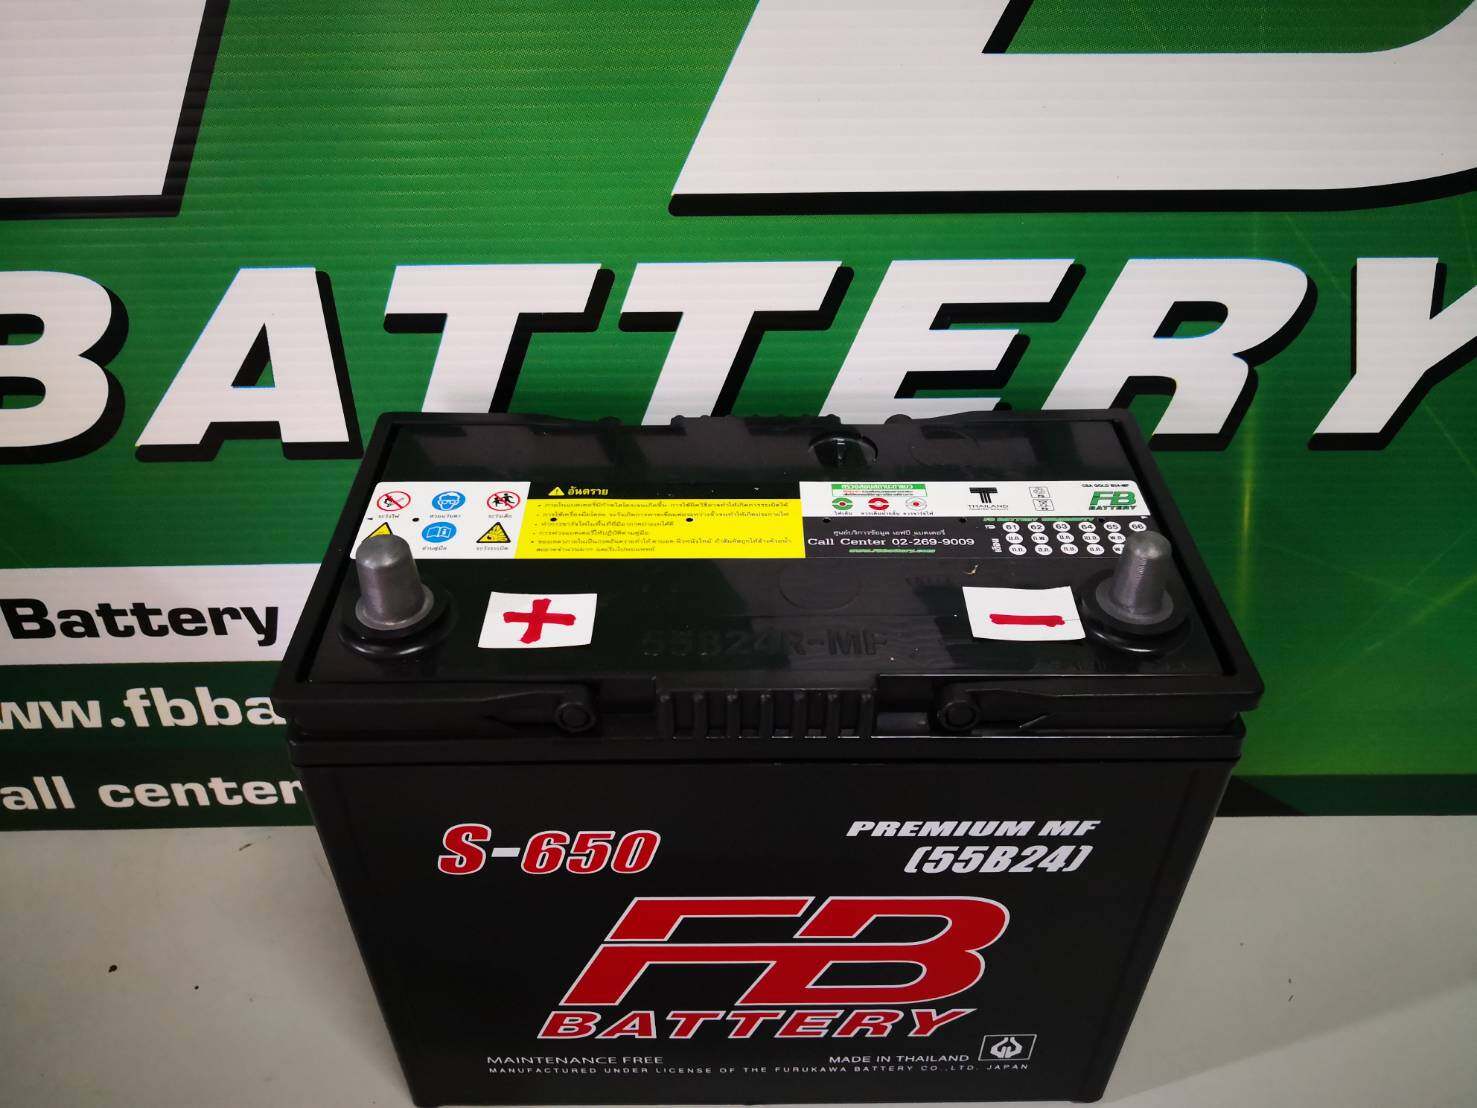 FB แบตเตอรี่ รถยนต์ ขนาดNS60 ไฟ12V50A รุ่น S-650R 55B24R ขั้วขวา ยาว23.7 ซม.กว้าง12.7 ซม. แกะกล่องใช้ได้เลย เป็นแบตระบบกึ่งแห้ง รับประกันโดย Siam Battery